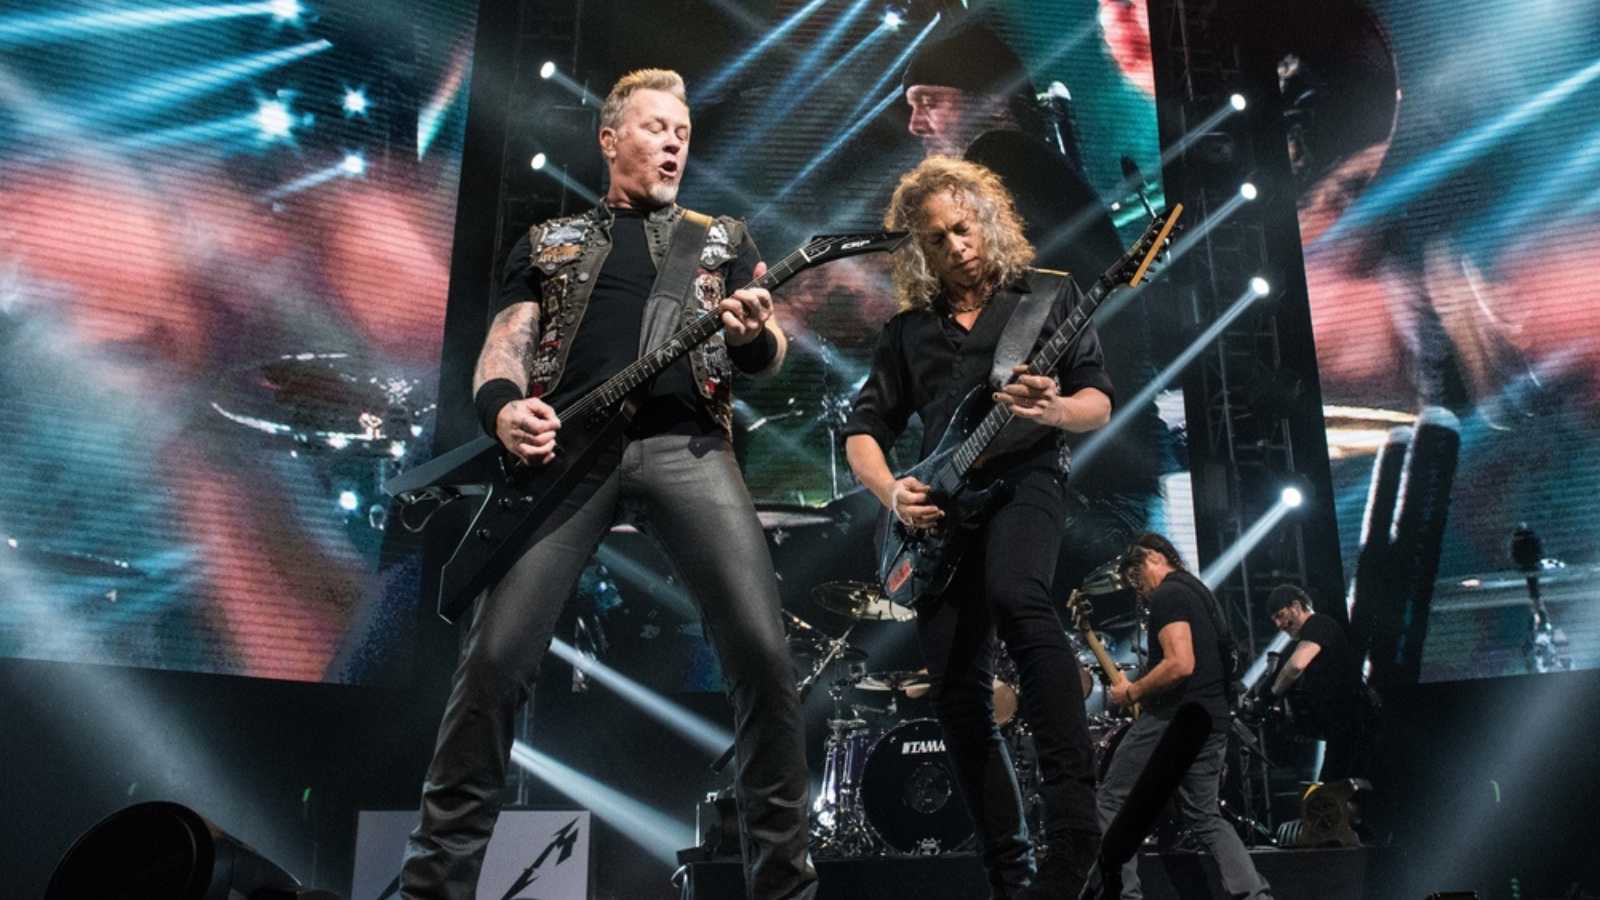 HONG KONG - January 20, 2017: American heavy metal band Metallica show, Vocalist James Hetfield with Guitarist Kirk Hammett performed on stage